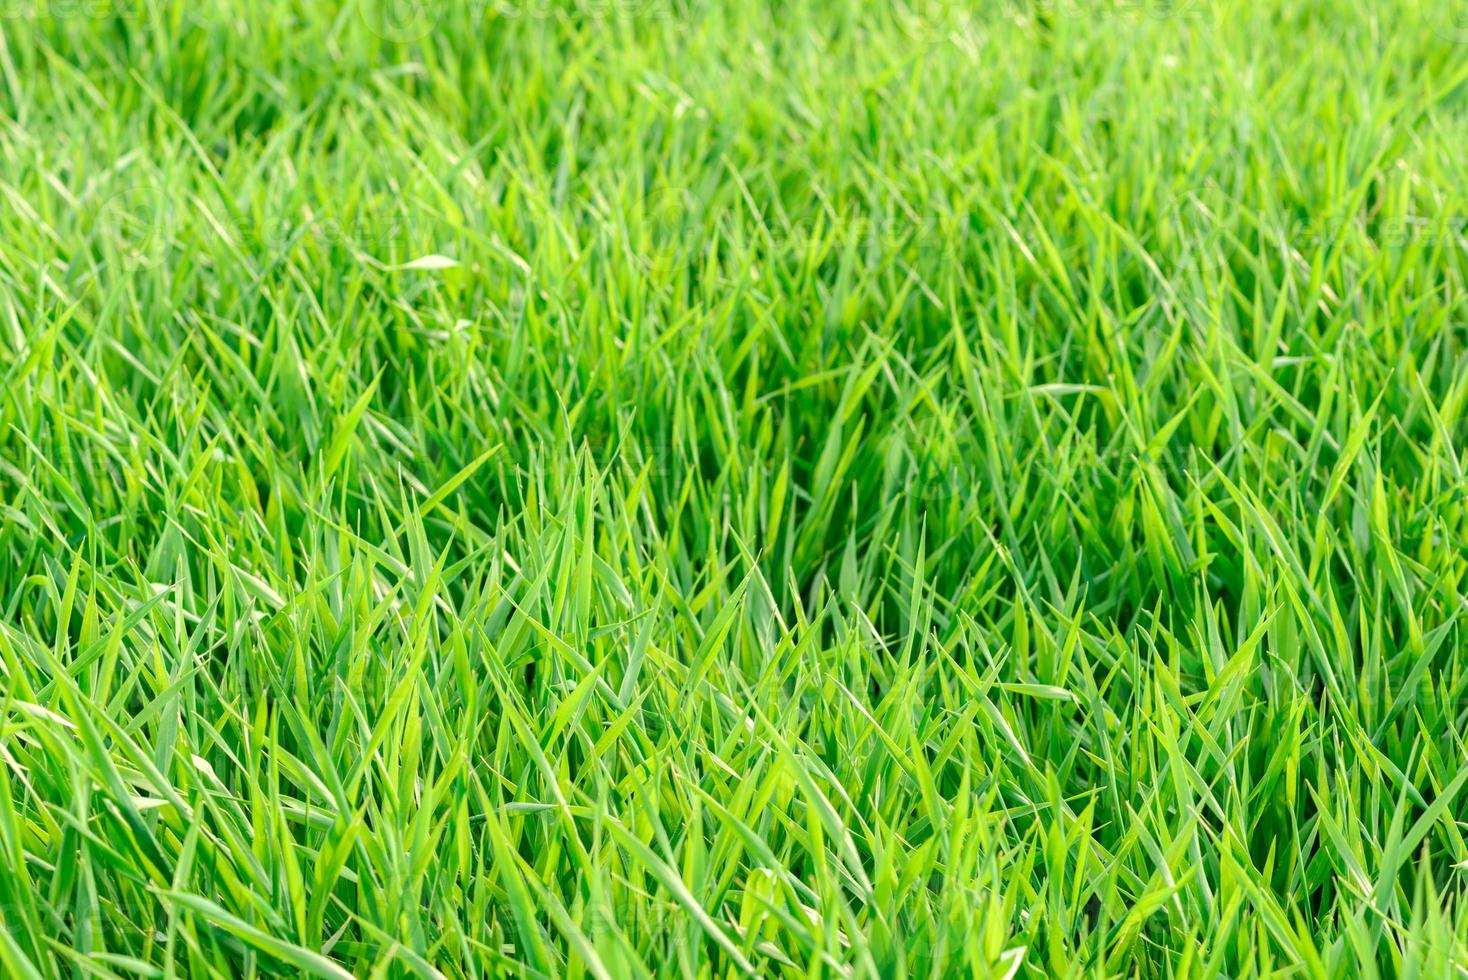 gebied van verse groene grastextuur als achtergrond foto